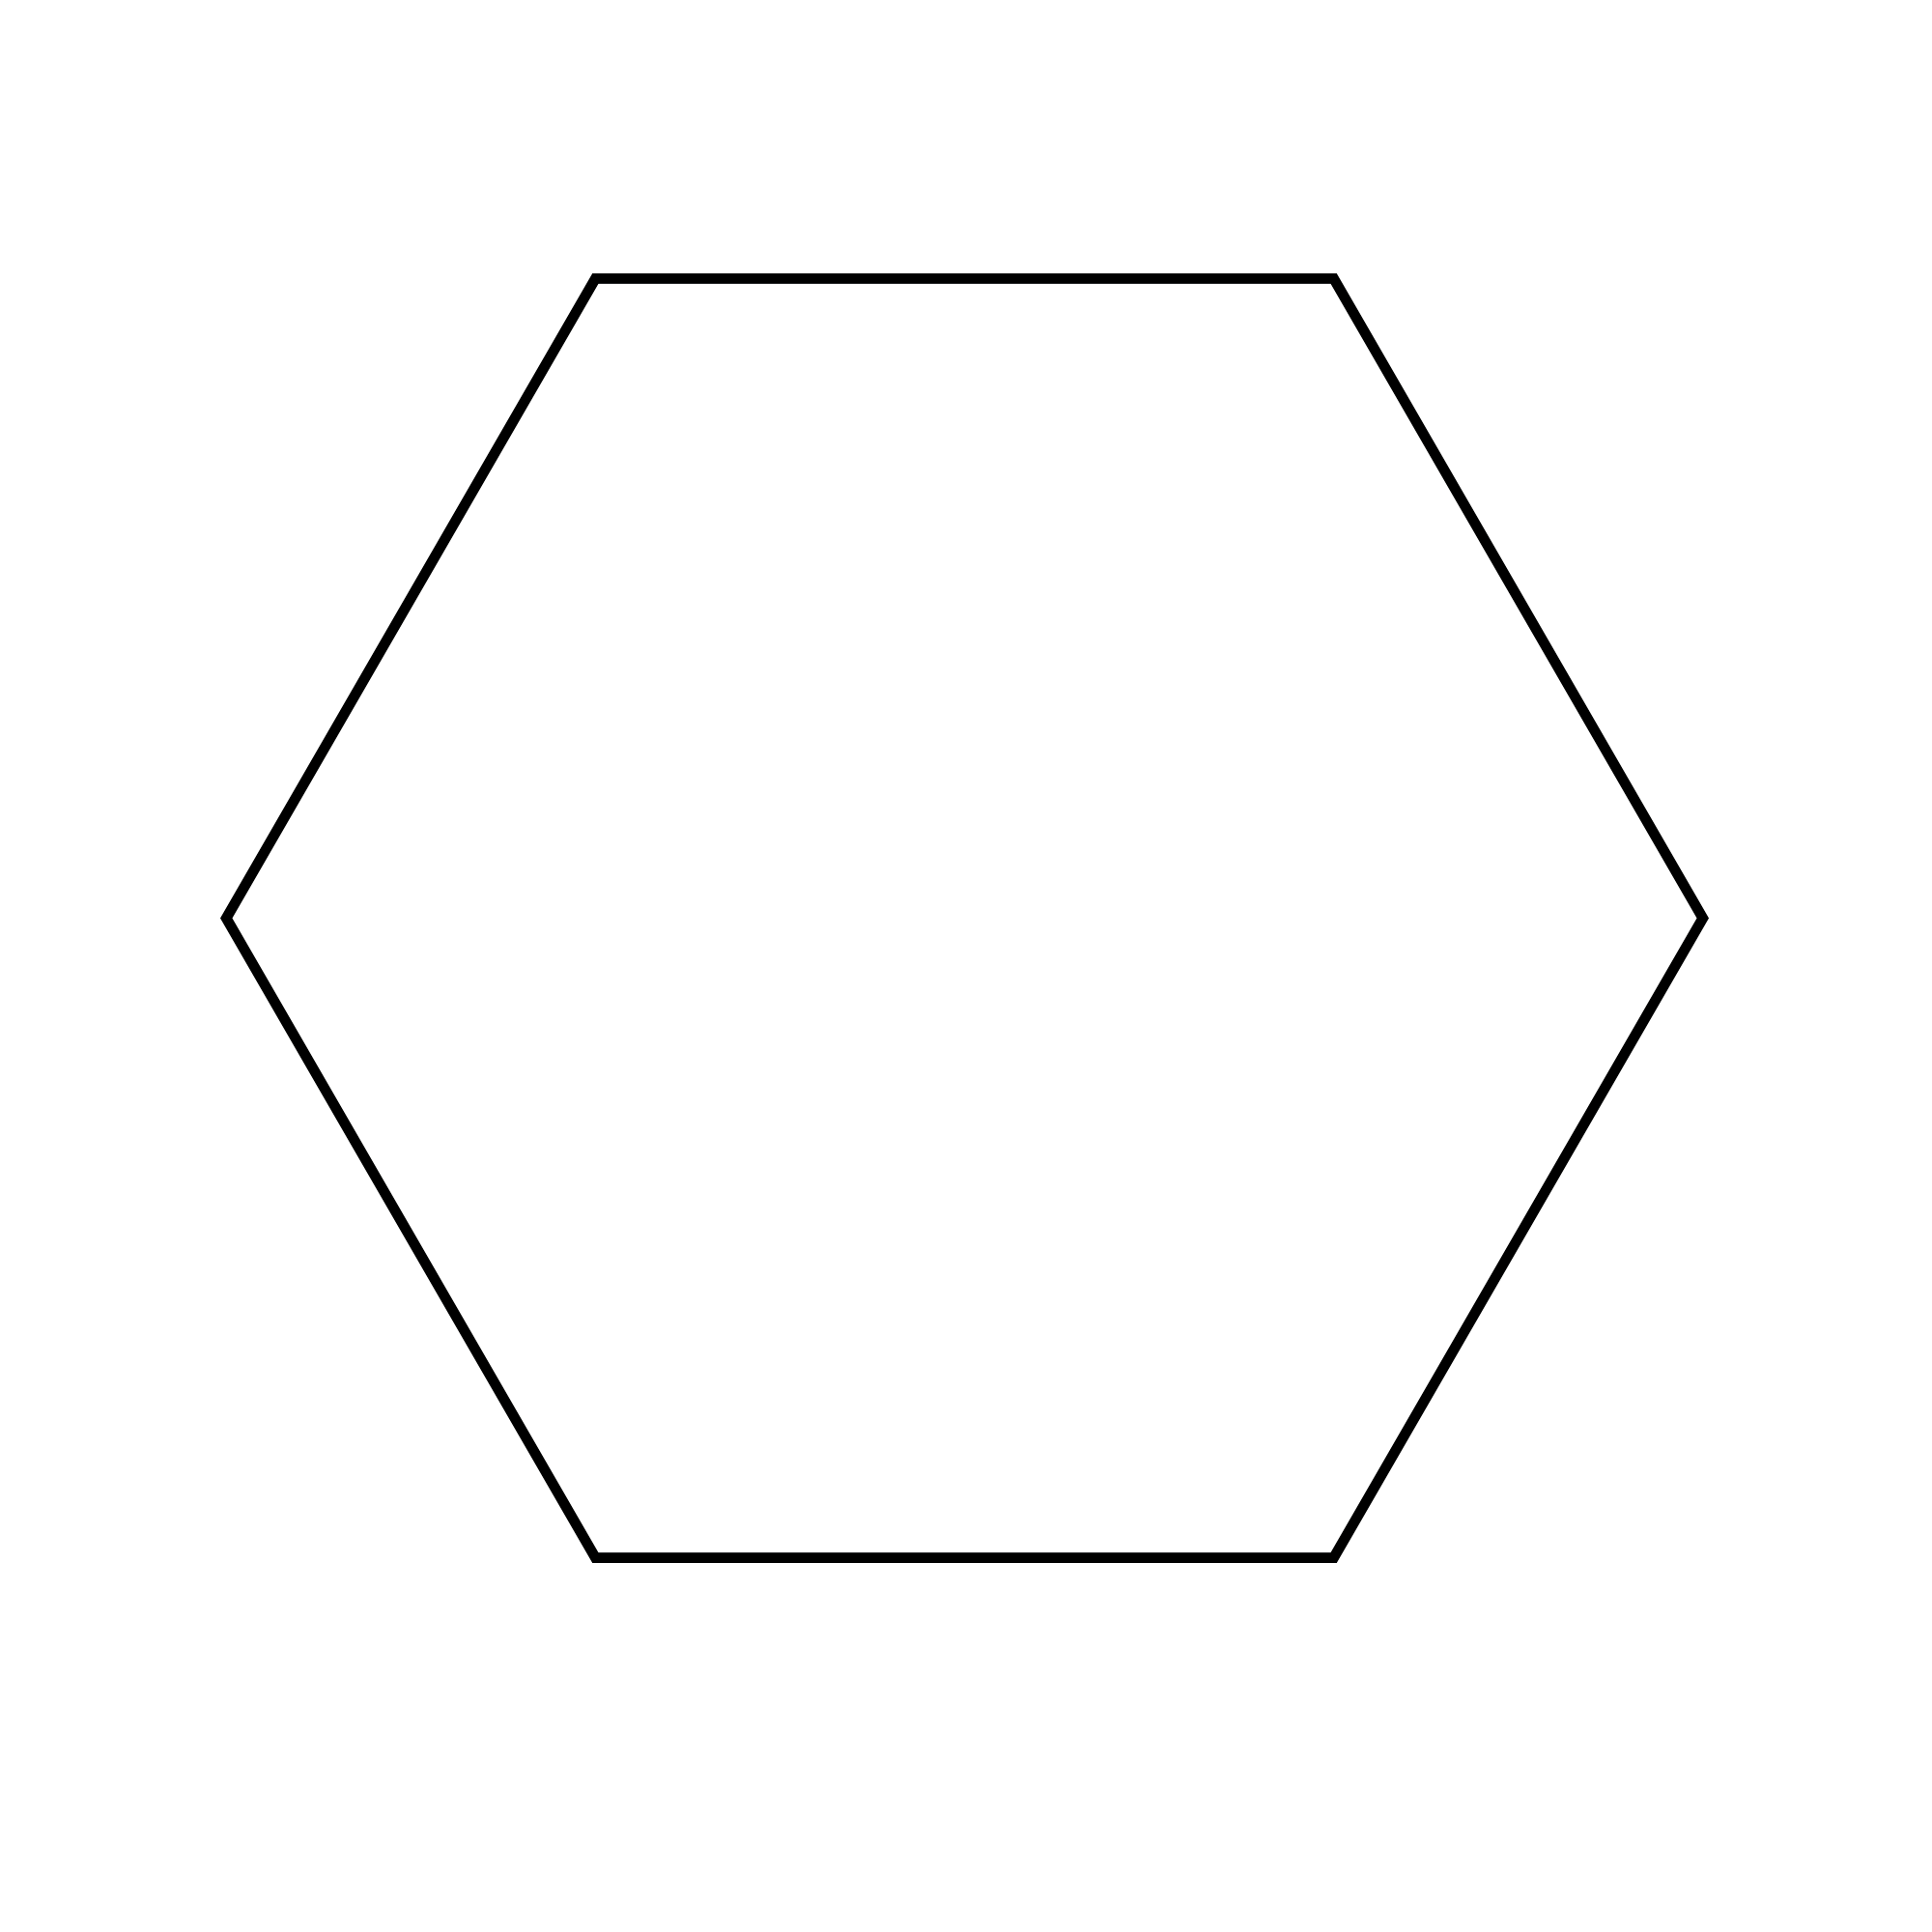 Figure geometriche - Figura geometrica piana - Pentagono poligono a 6 lati